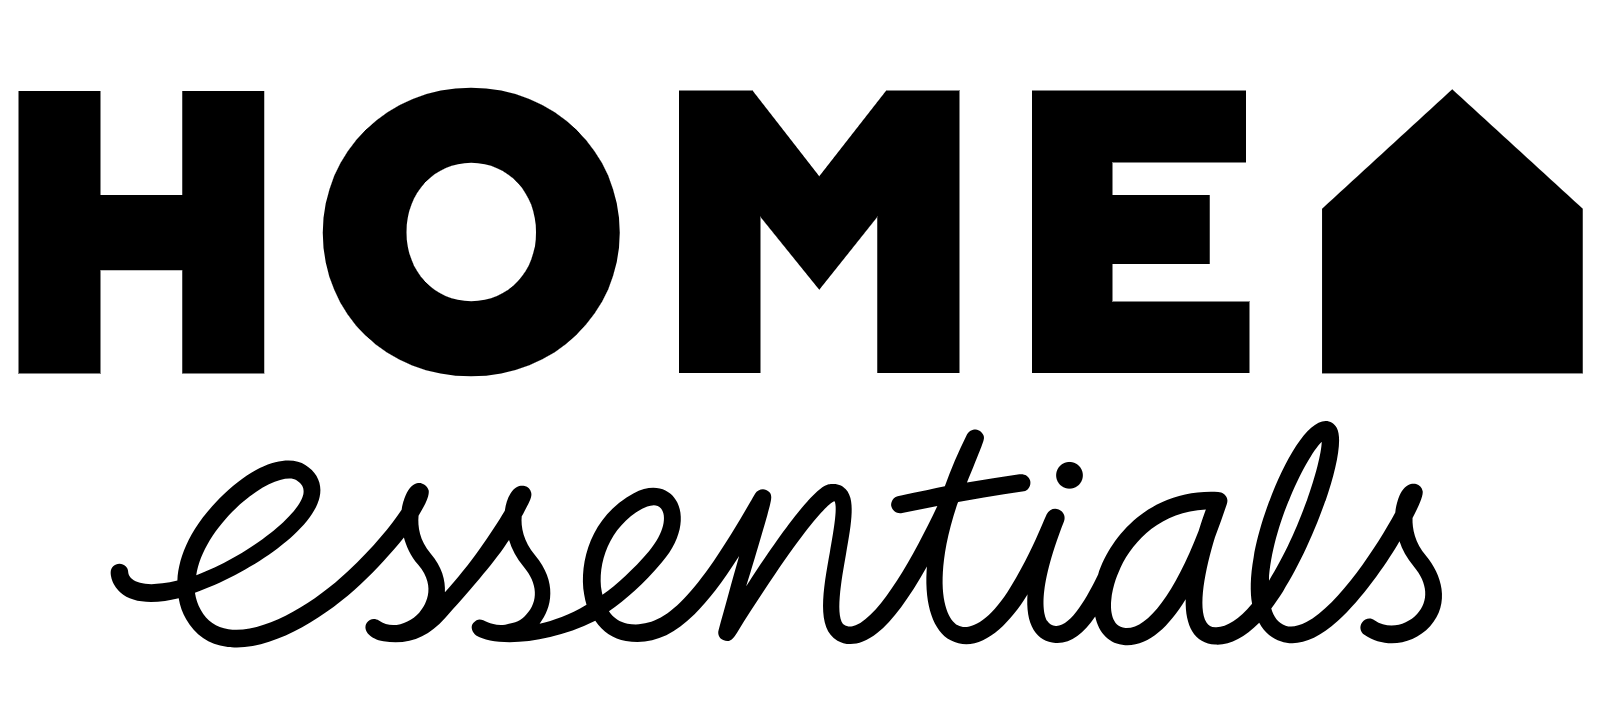 Home Essentials Promo Code 03 2021: Find Home Essentials Coupons